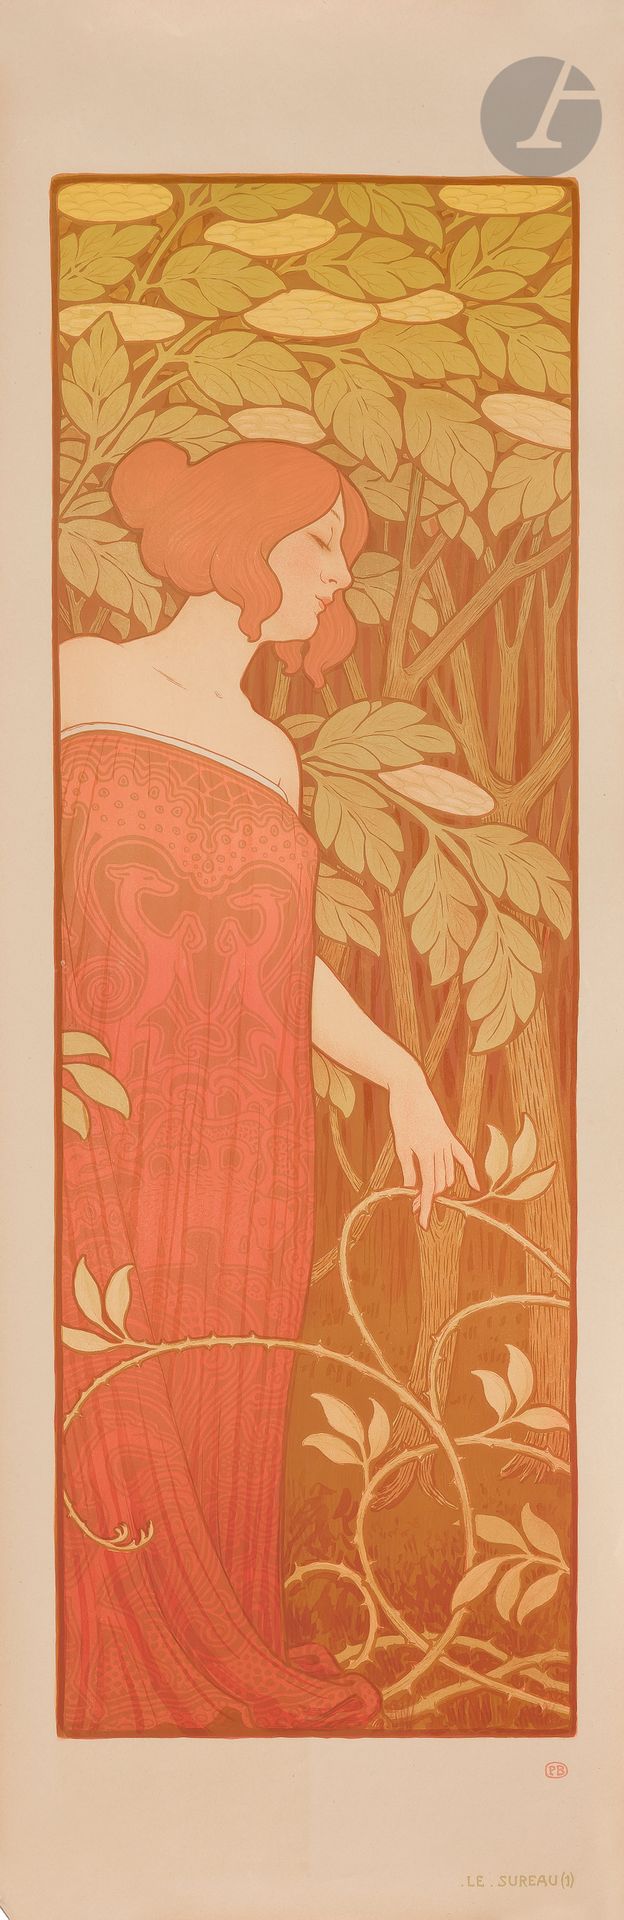 Null Paul Émile BERTHON (1872-1909
)The Elder Tree铬版画
。不在画布上。
未印刷，
脚下有图案
。

状况良好&hellip;